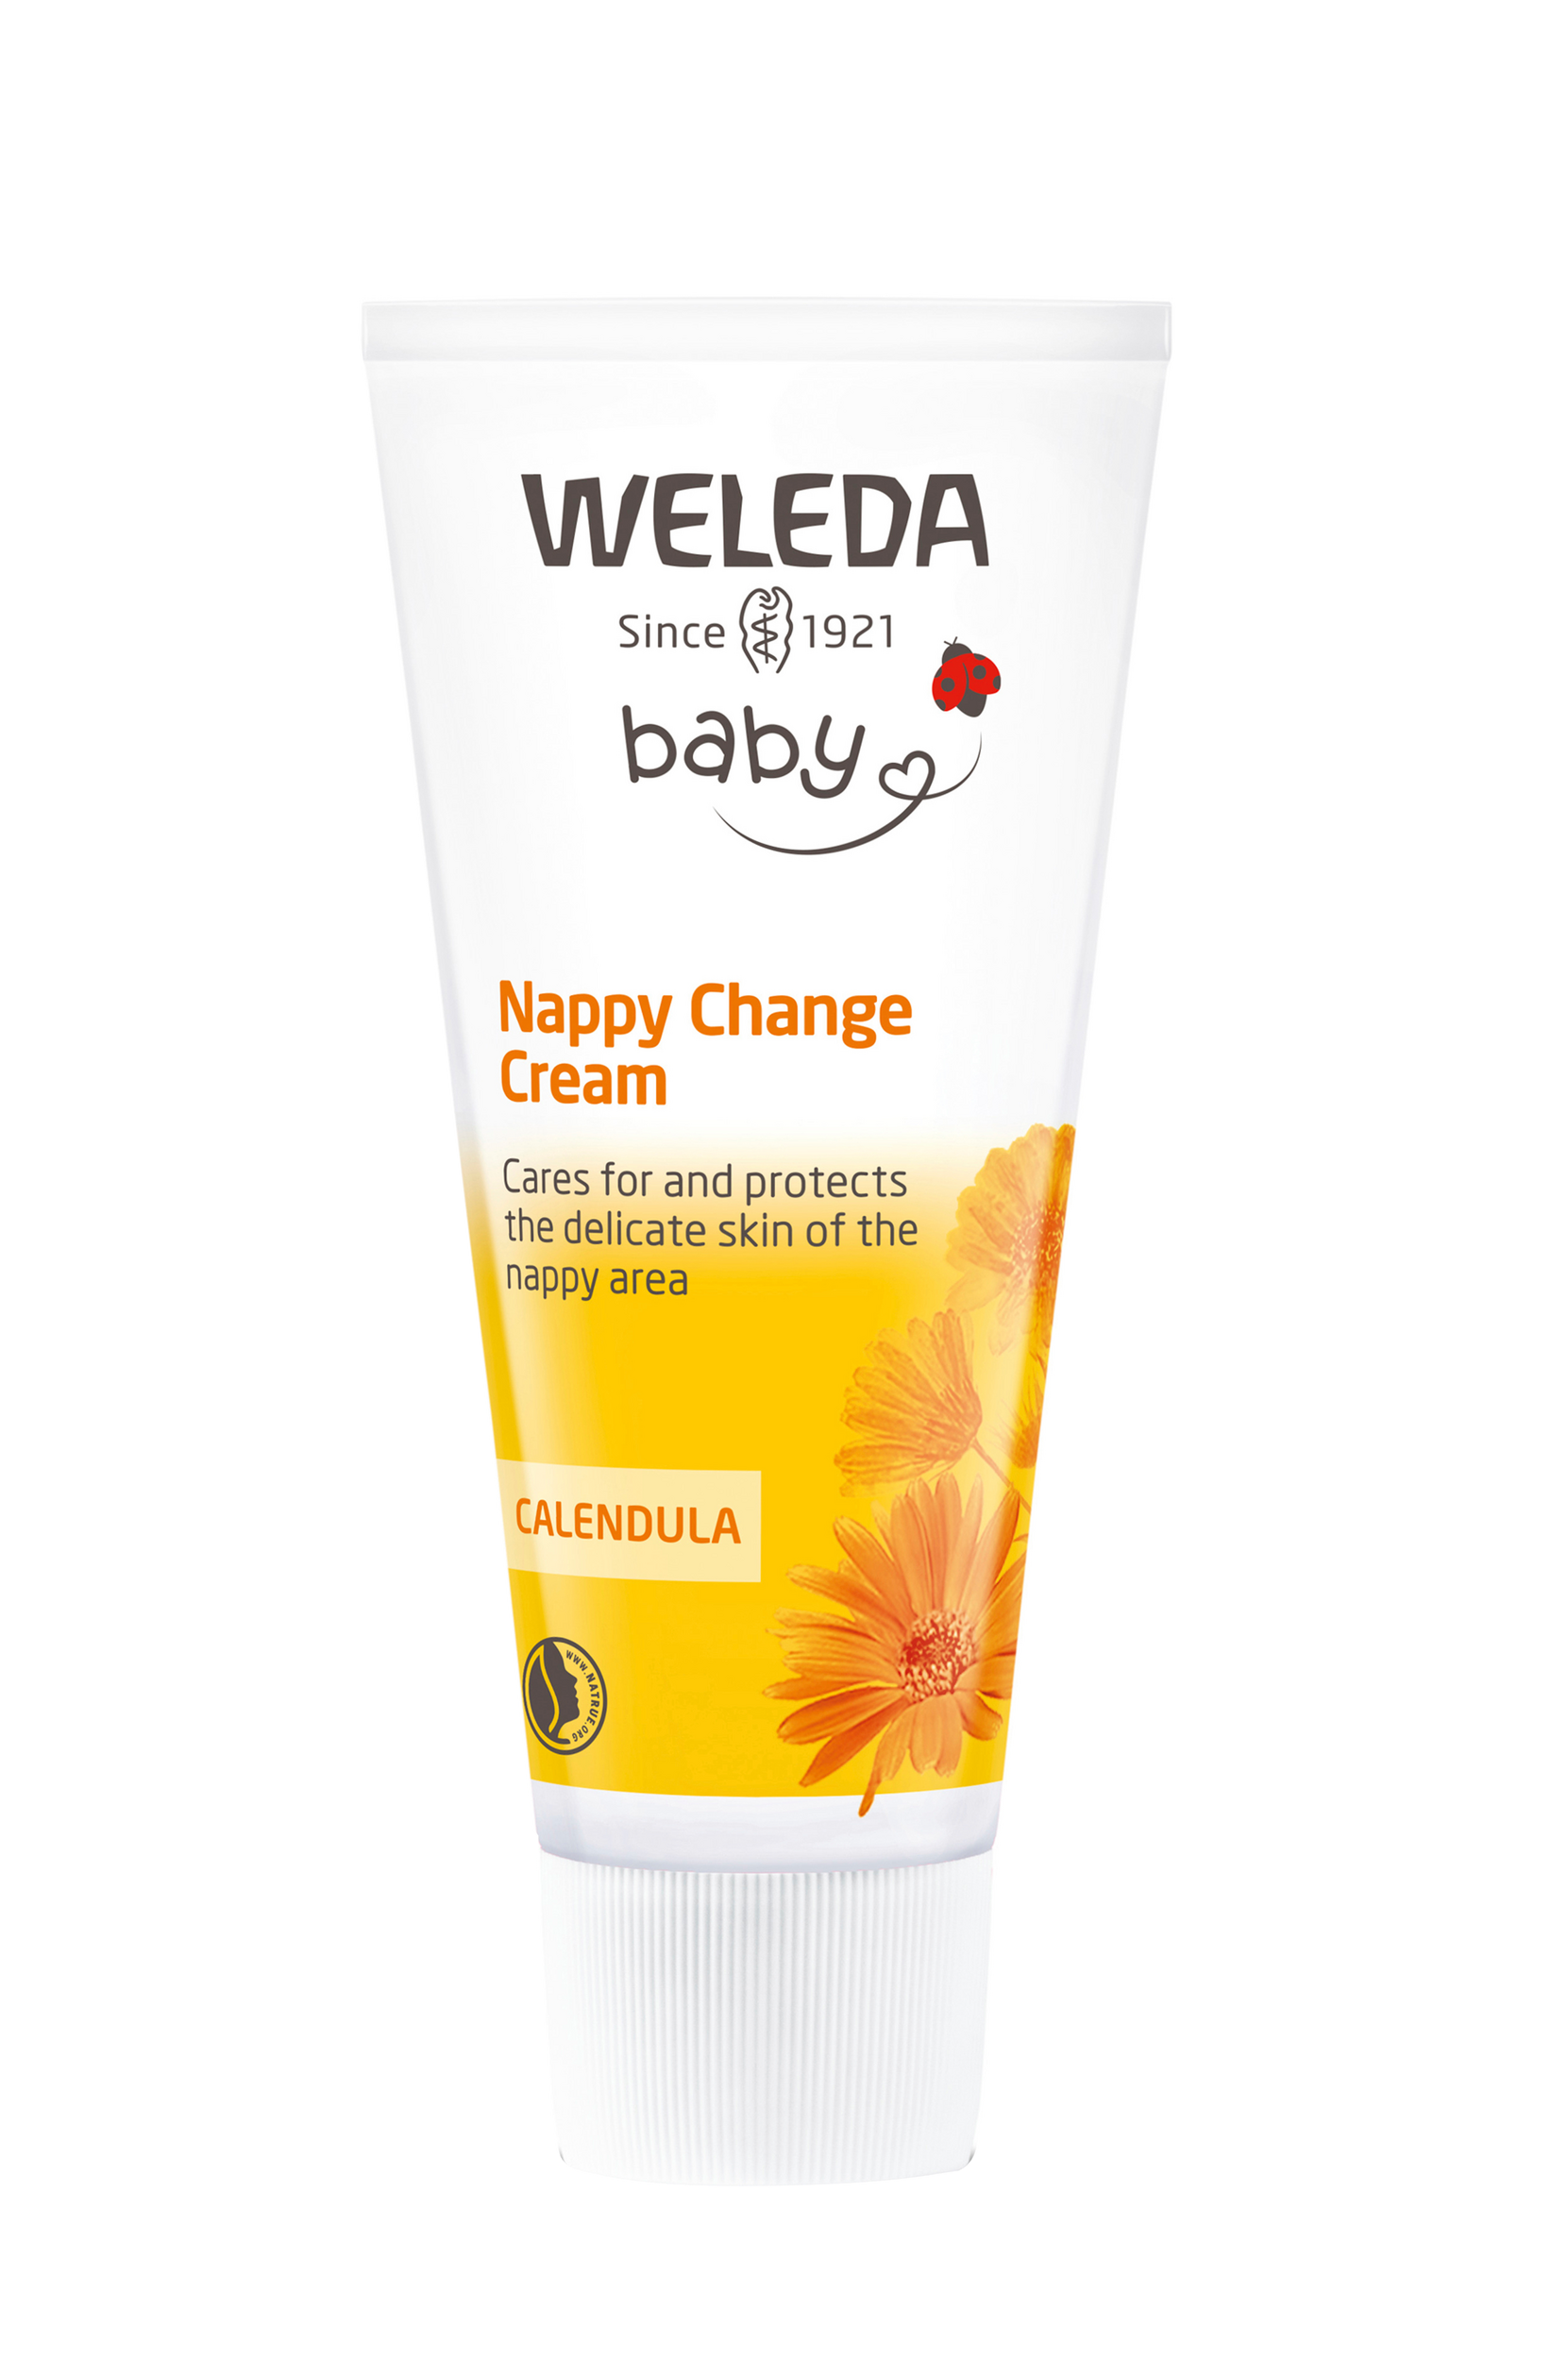 Calendula Nappy Change Cream, Weleda